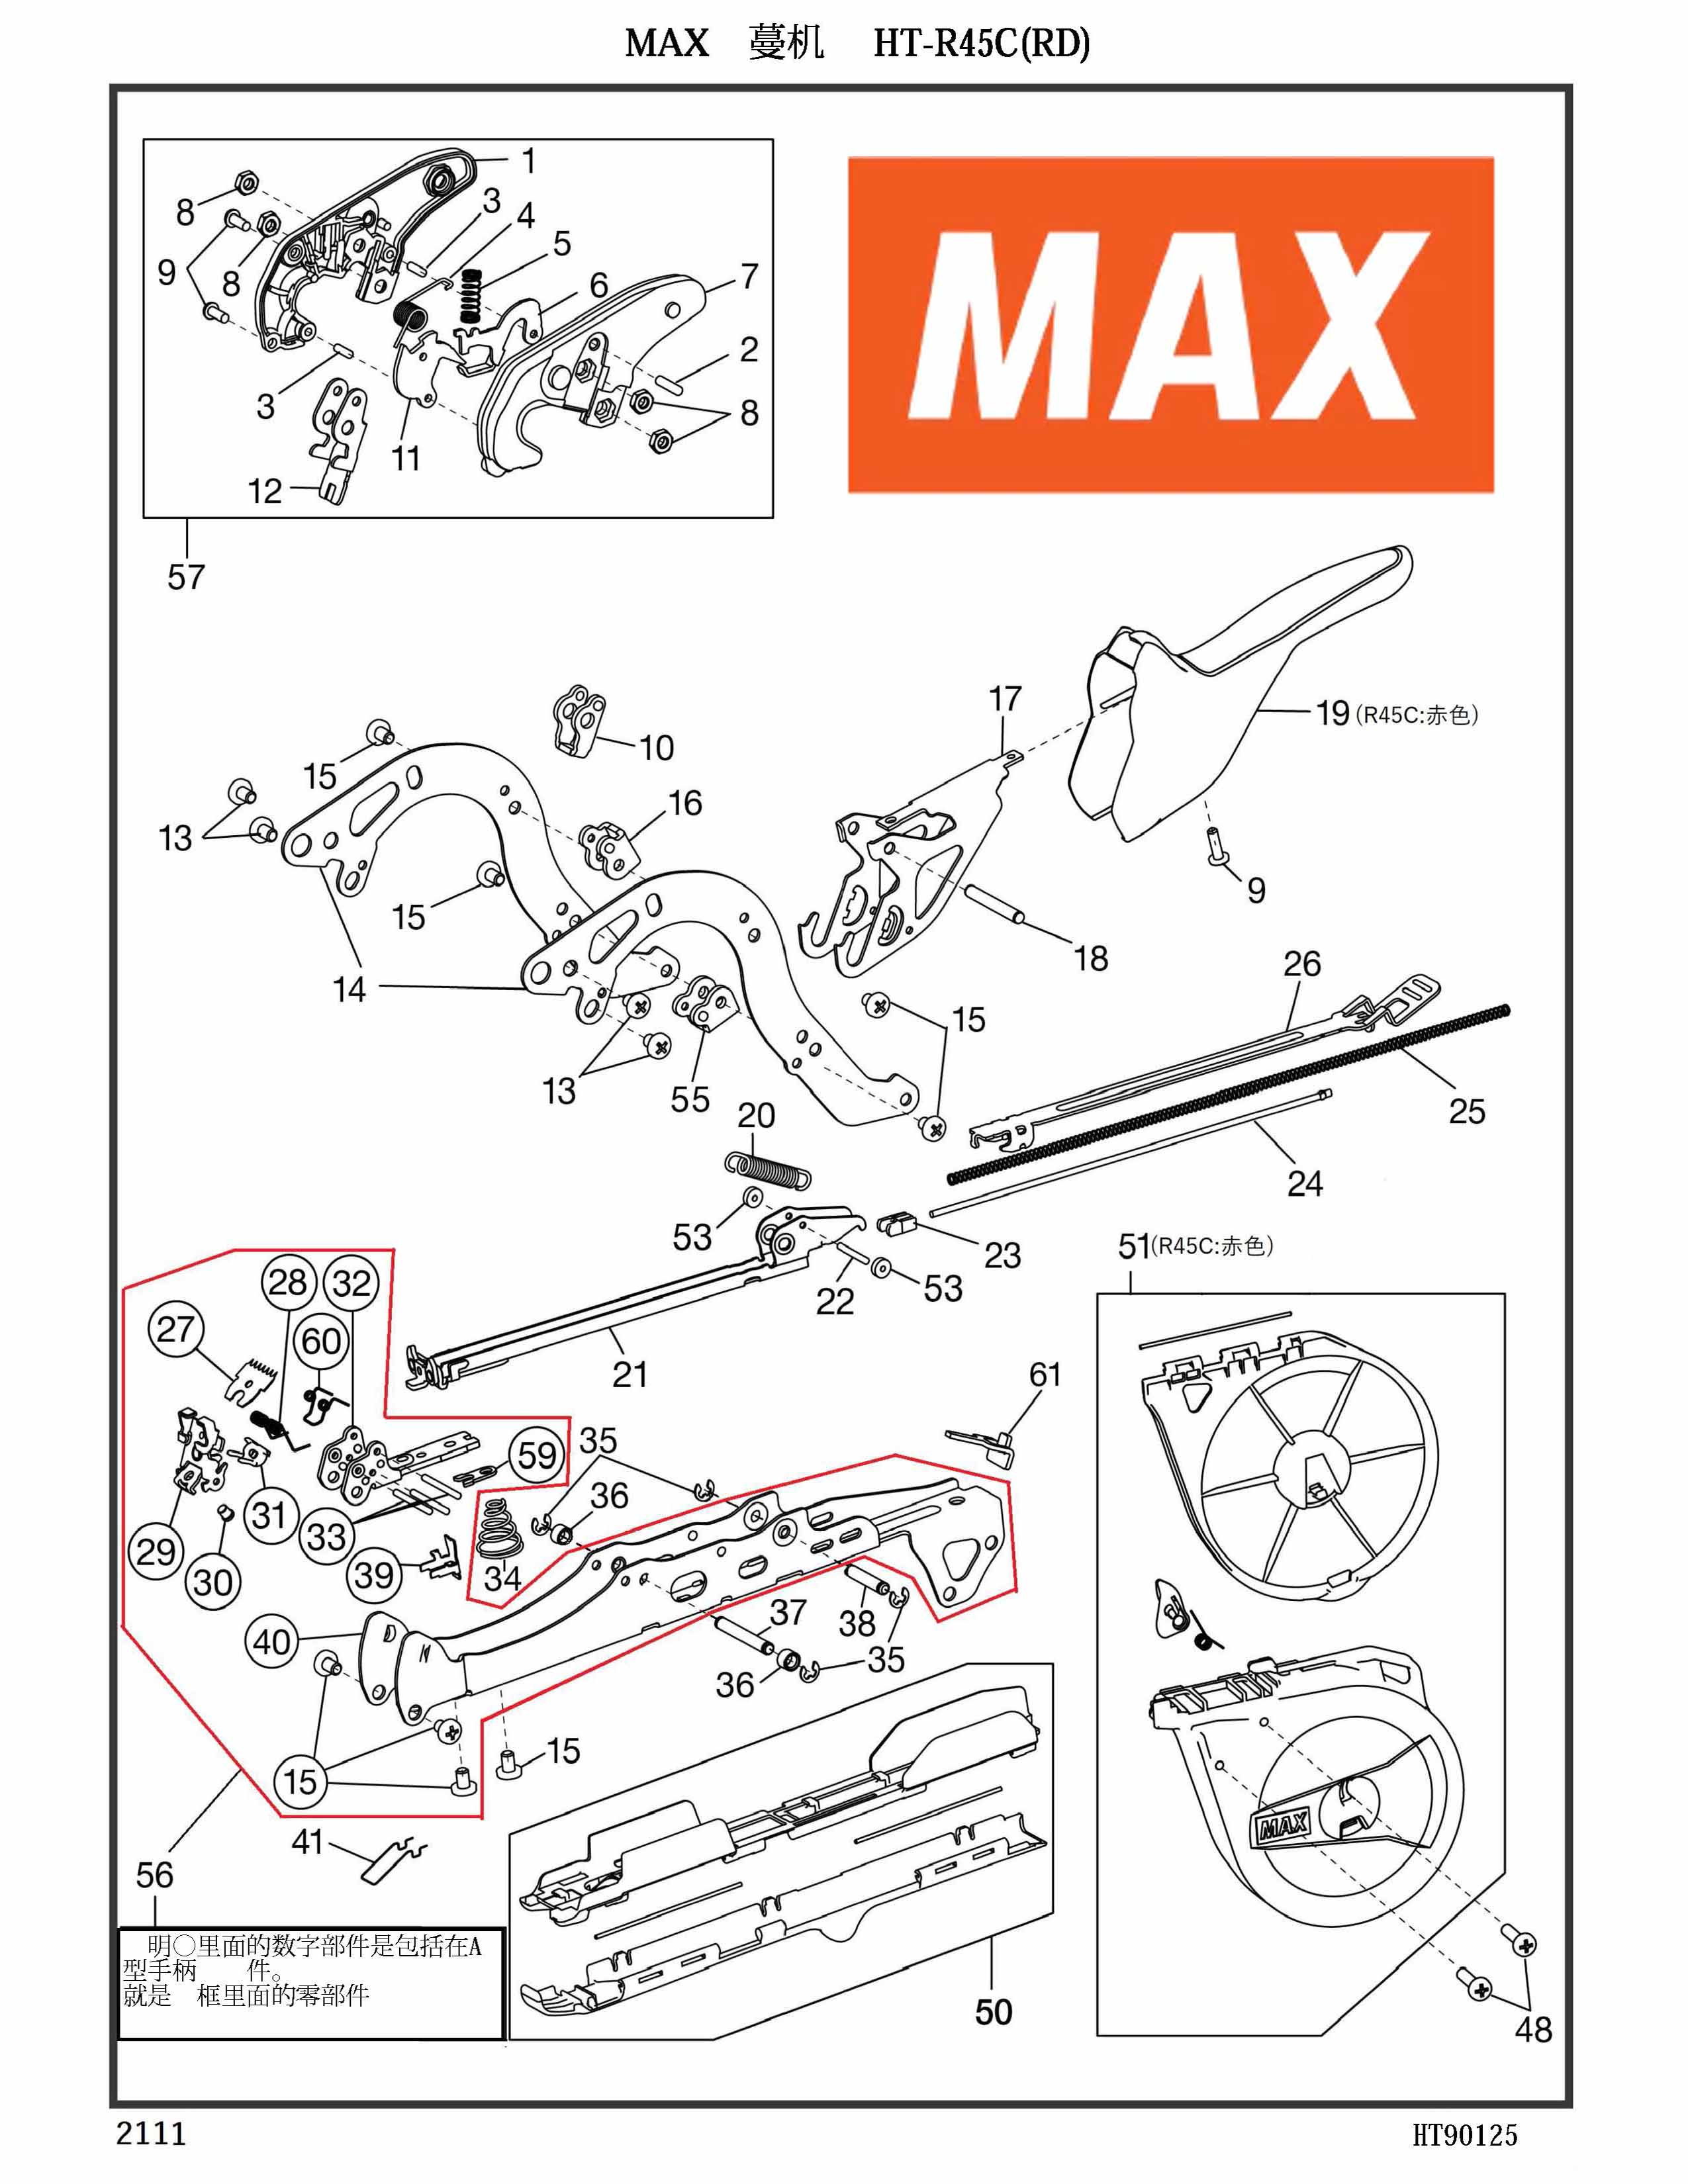 MAX Tapener Part KK13390 EXTENSION SPRING 3390 (HT-R) Fits MAX HT-R45L(O) R45C(RD) HT-R1 HT-R2 #20